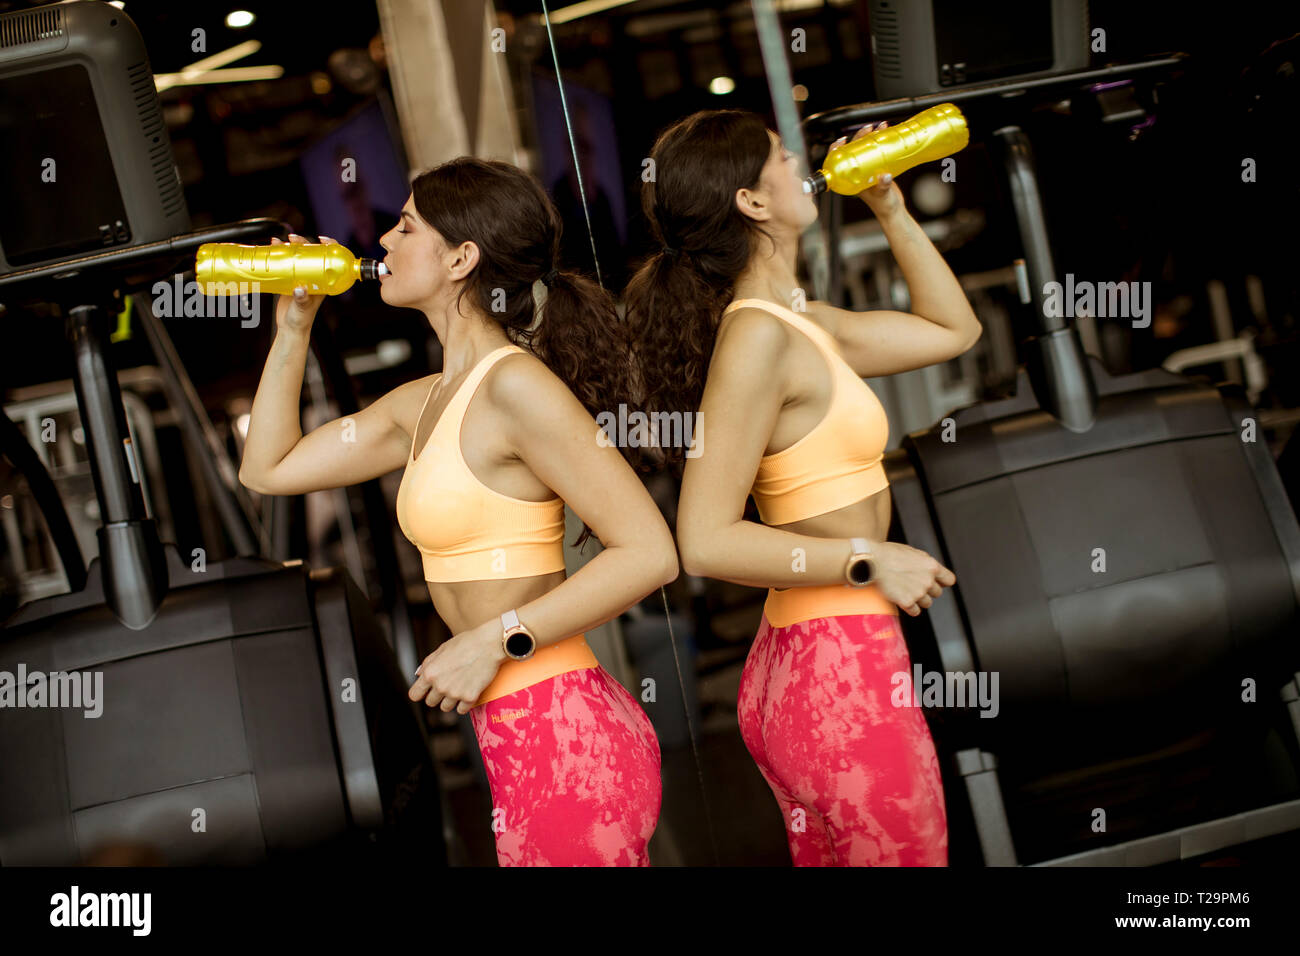 Donne sane in giallo sport shirt sono acqua potabile in palestra Foto Stock